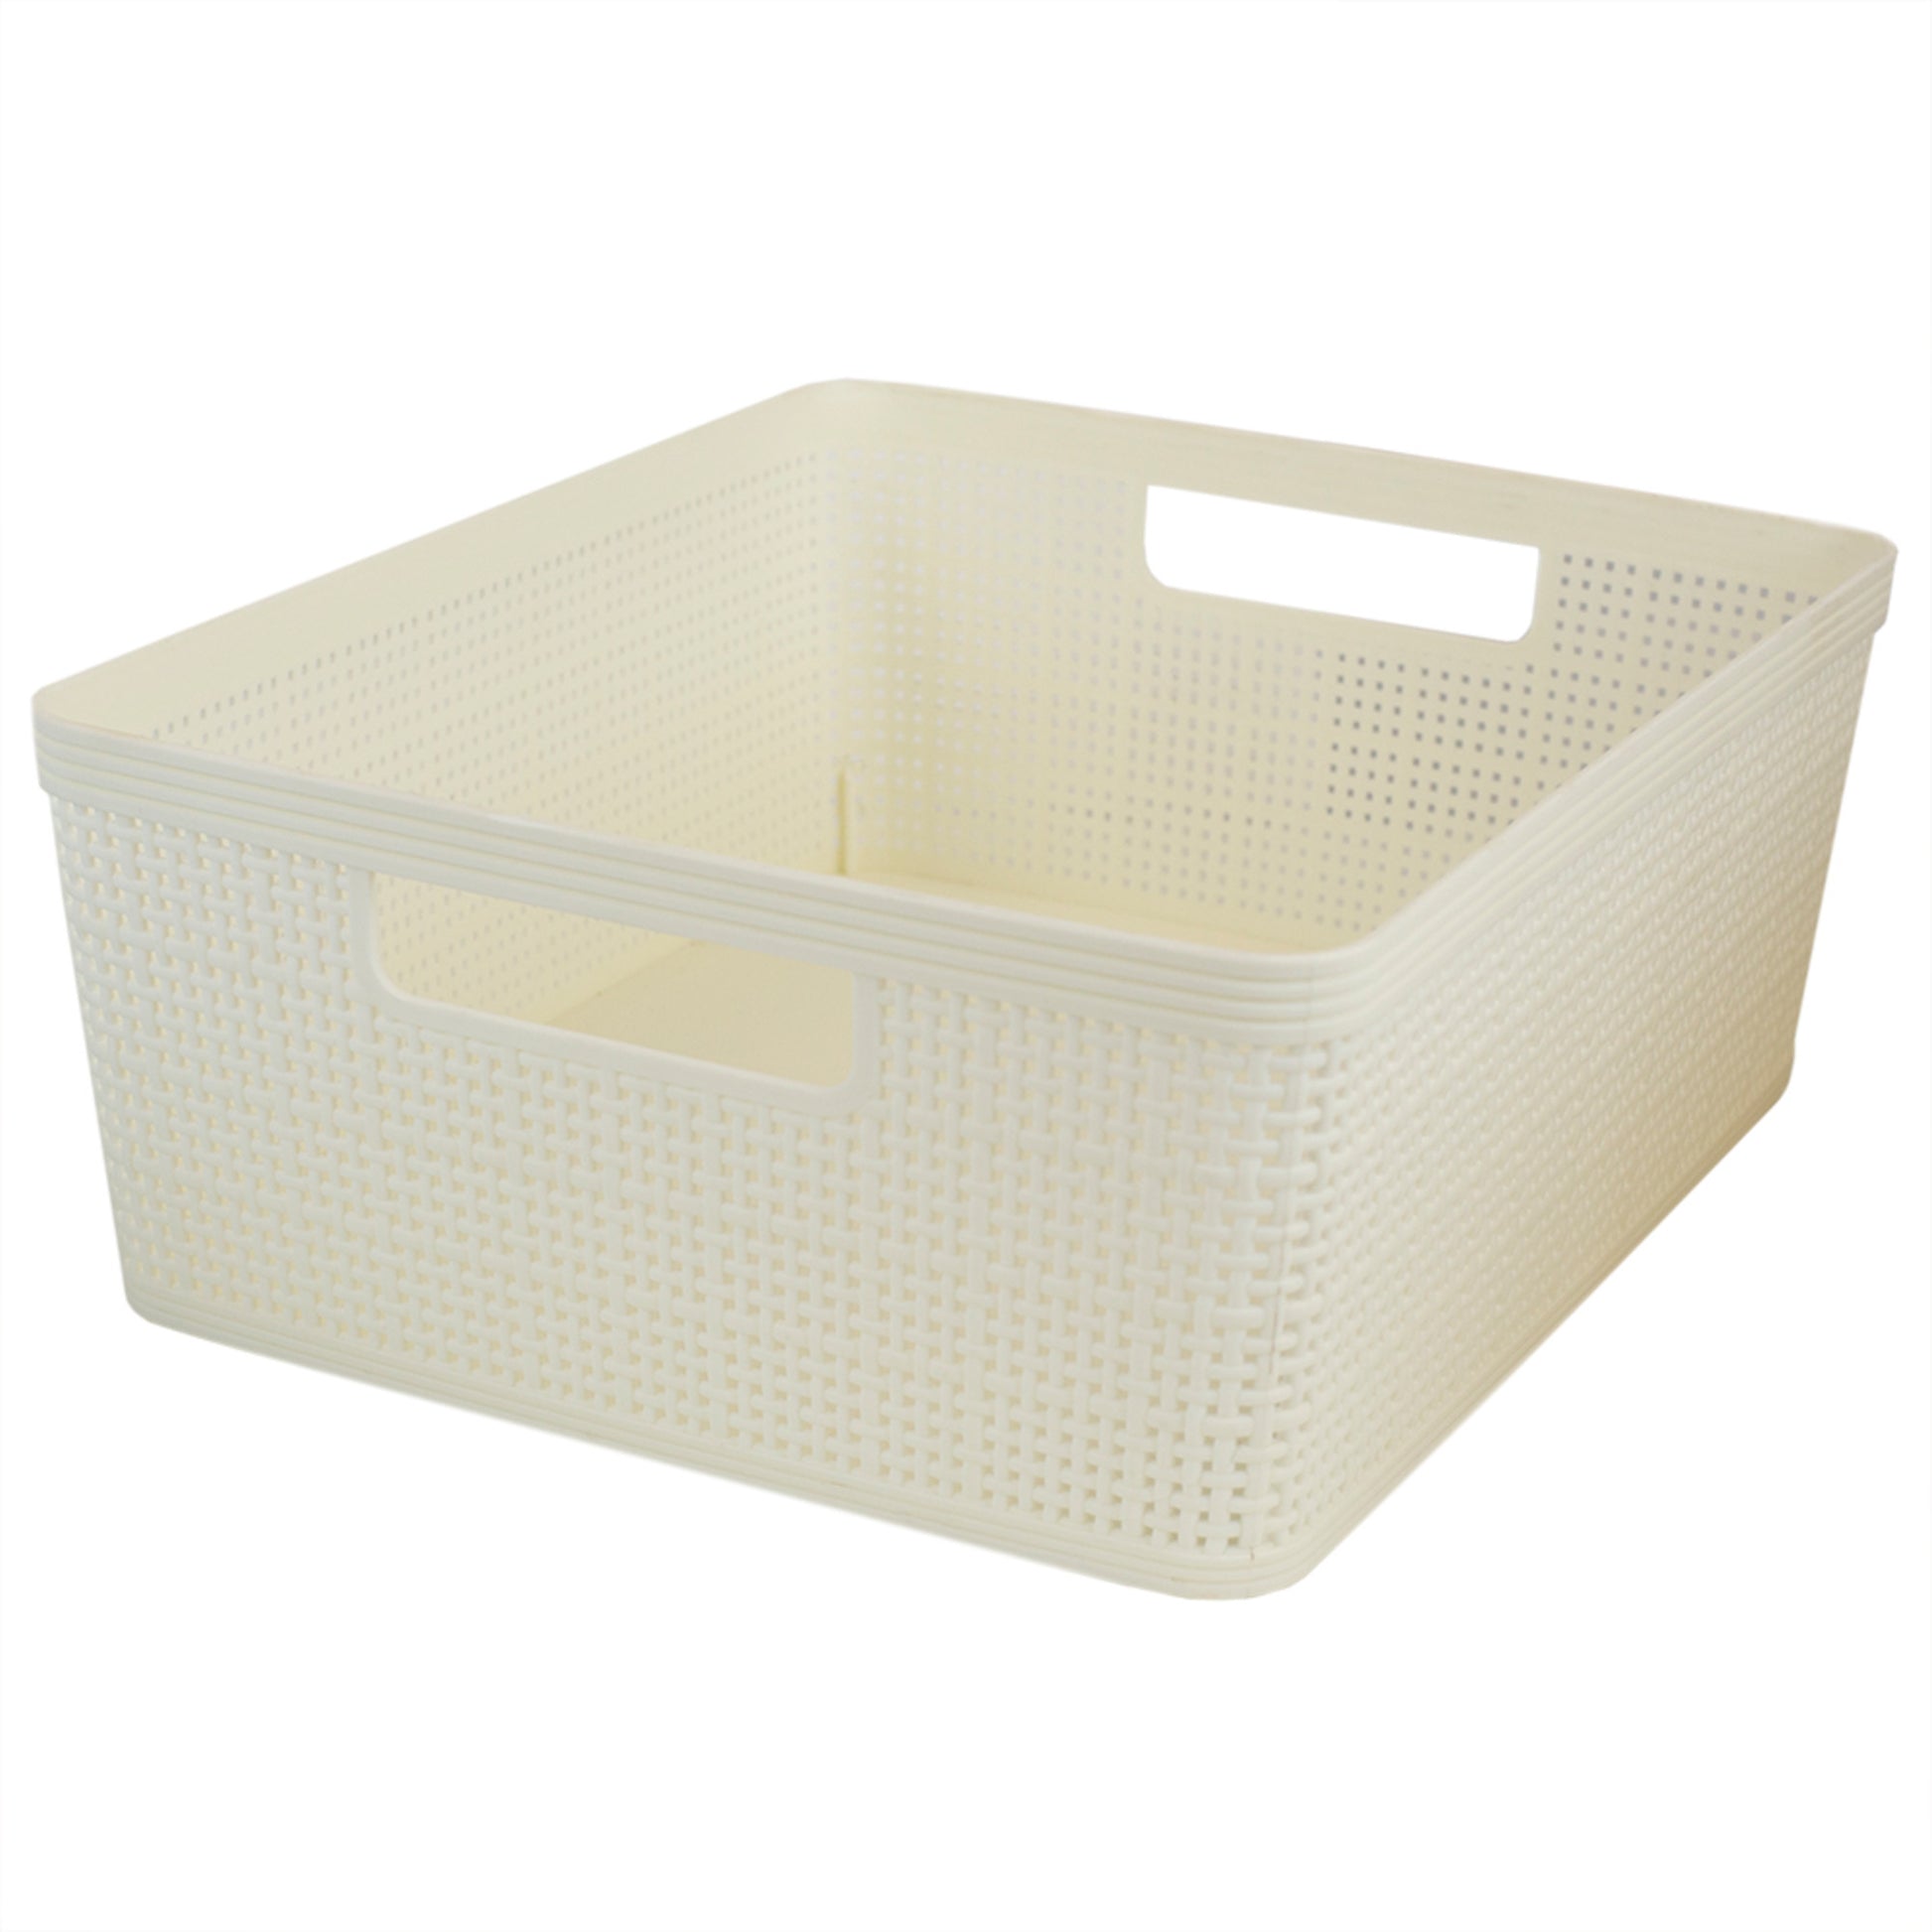 Home Basics Trellis Large Plastic Storage Basket with Cut-Out Handles, Beige - Beige